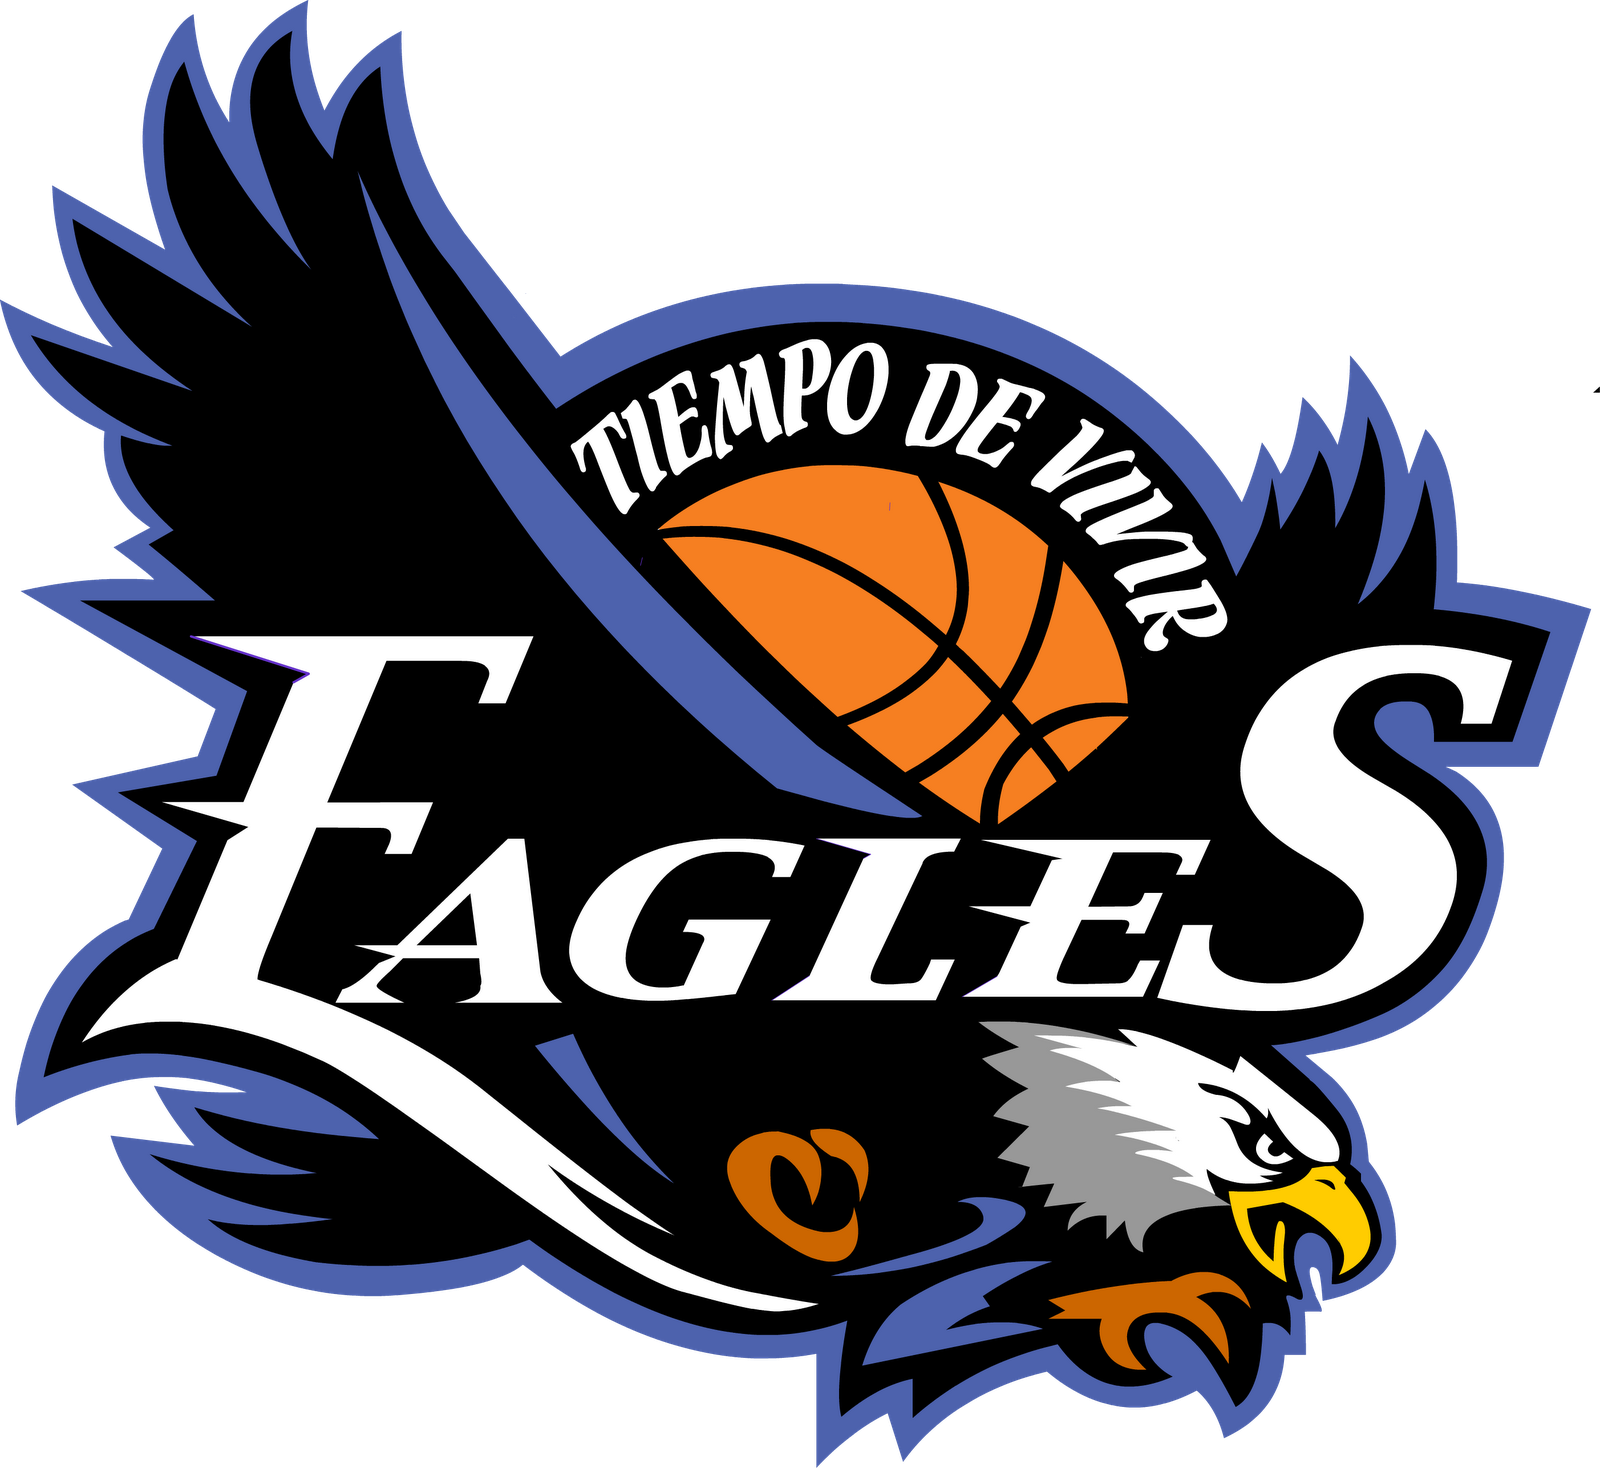 Eagles team logo sport. Clipart shield basketball